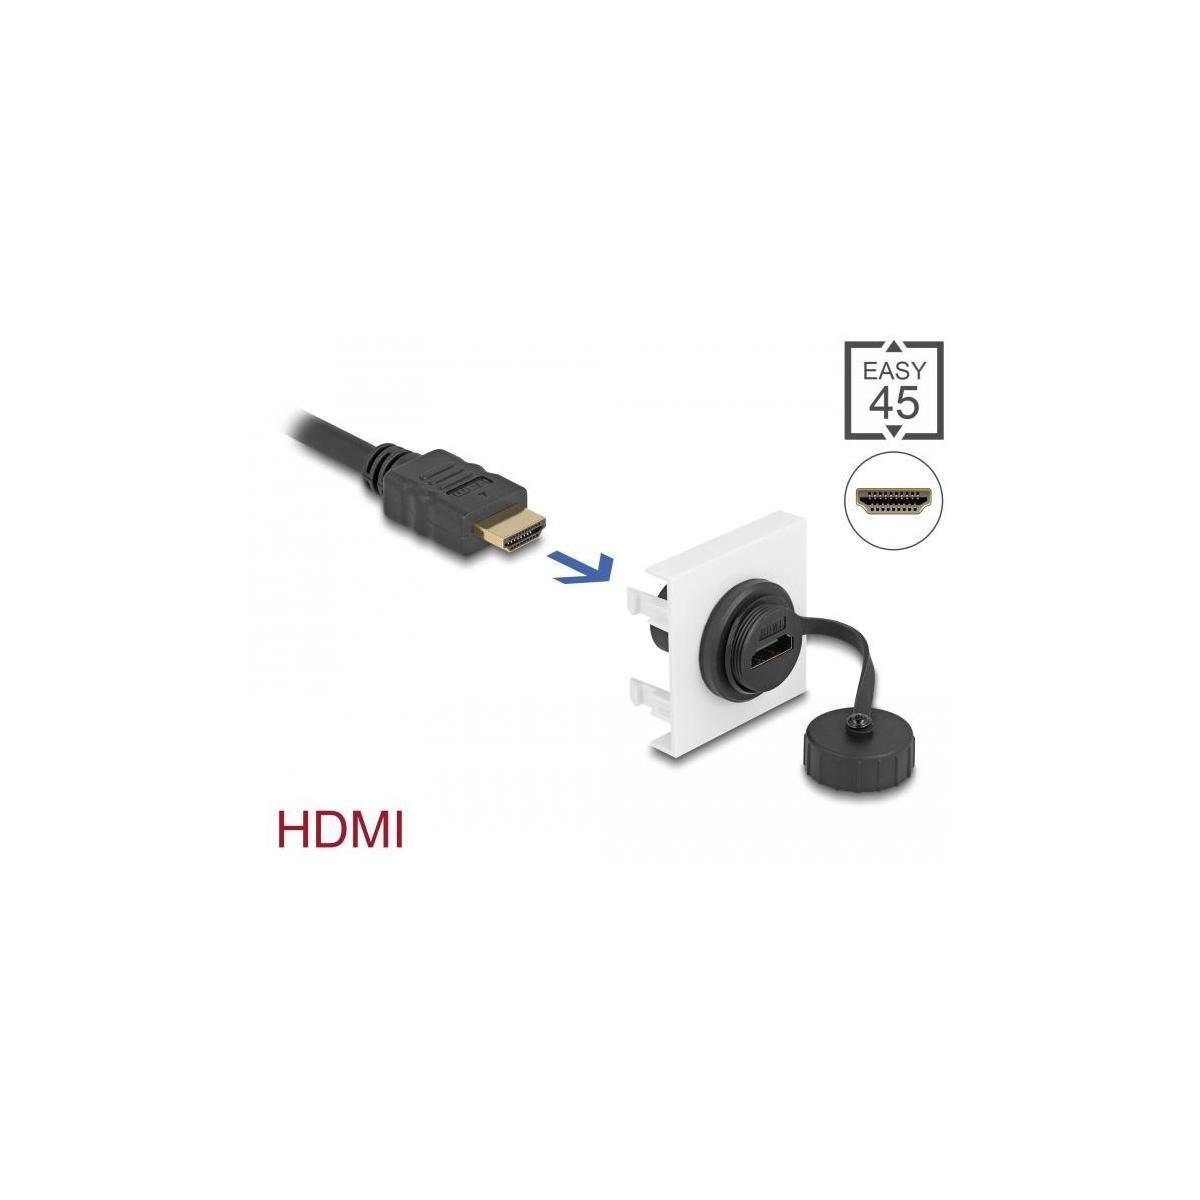 45 Computer-Kabel, 45 Easy Delock HDMI HDMI-A, Modul, 45 mm HDMI x